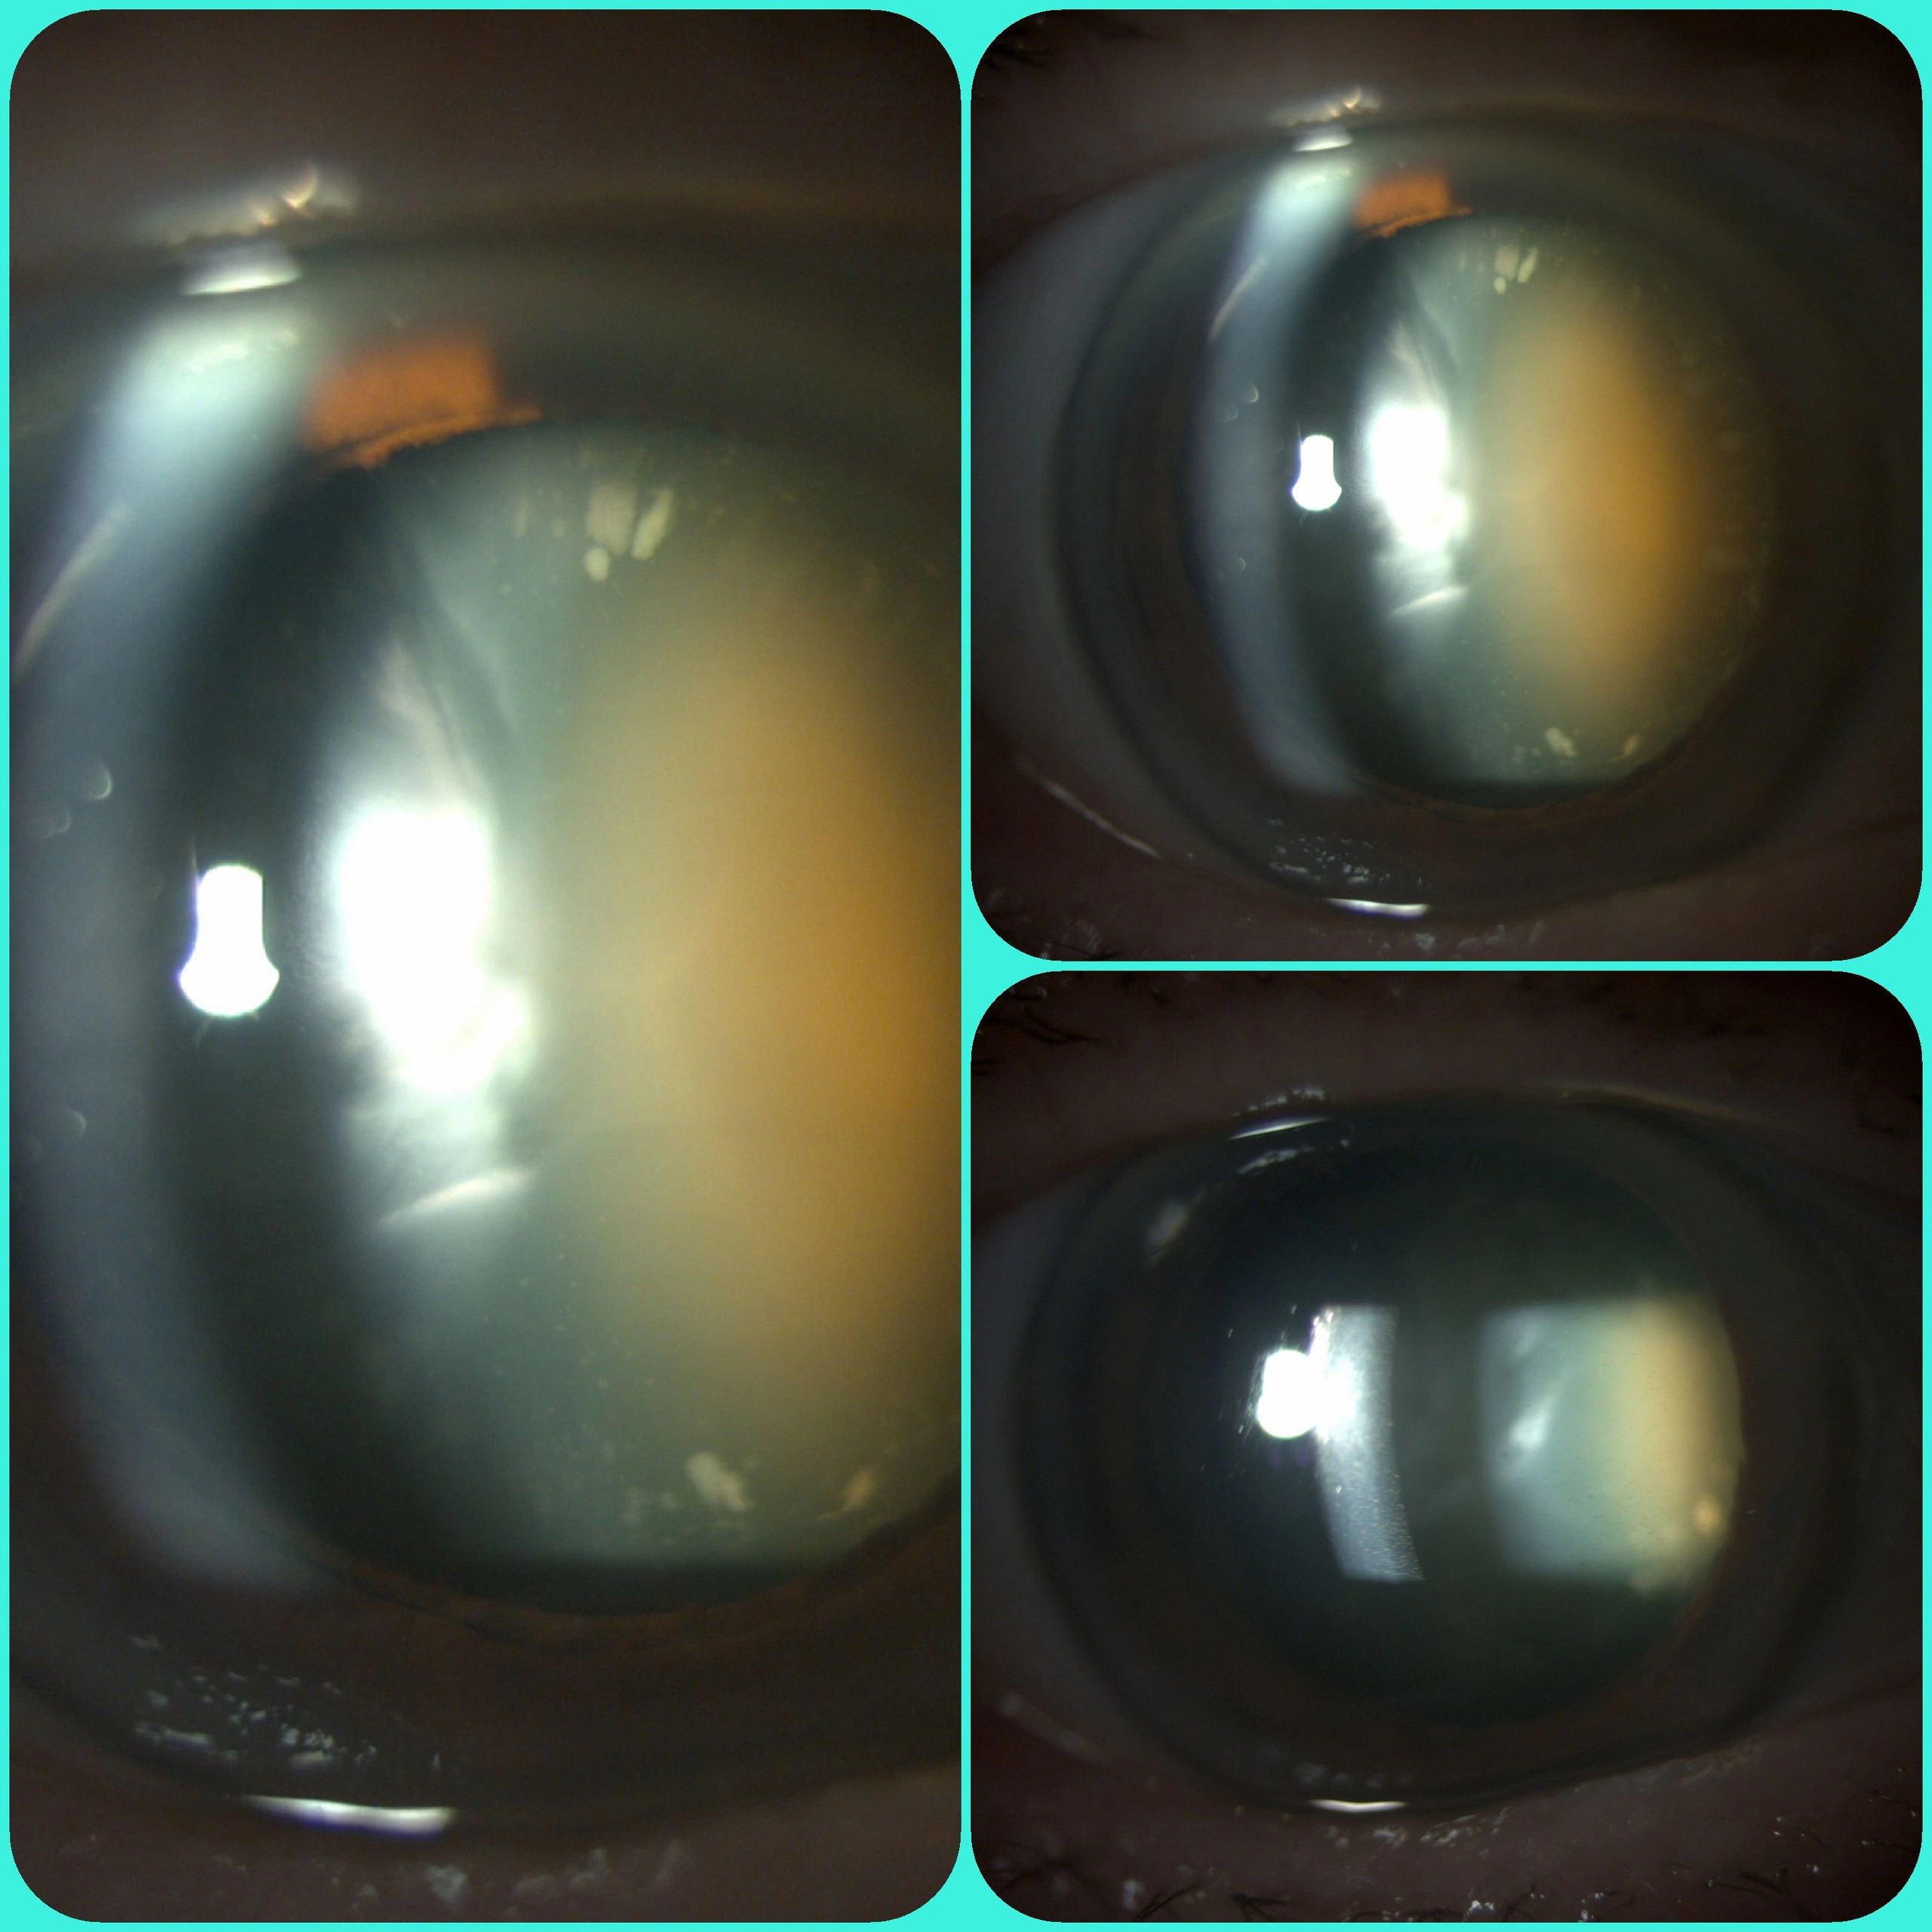 Cataract Surgeon
Eye surgeon
Mr patel